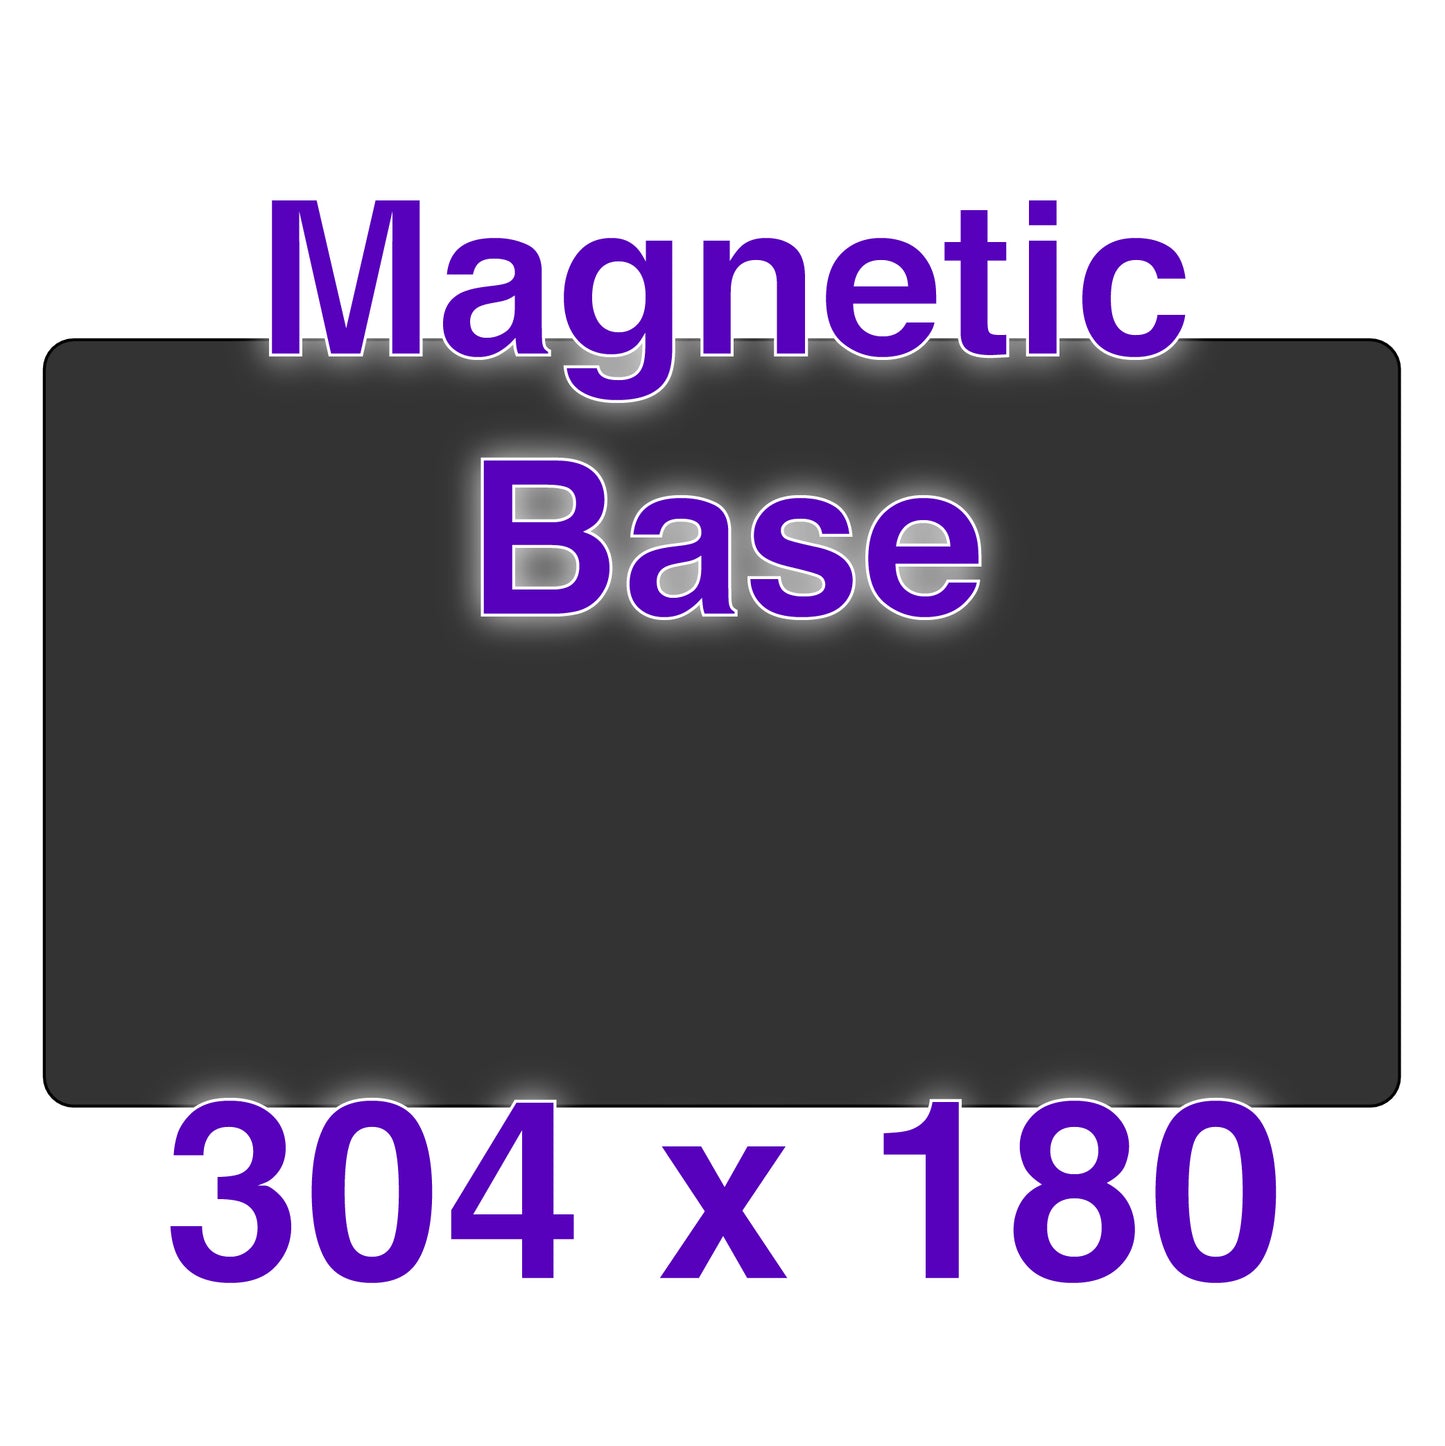 Magnetic Base - 304 x 180